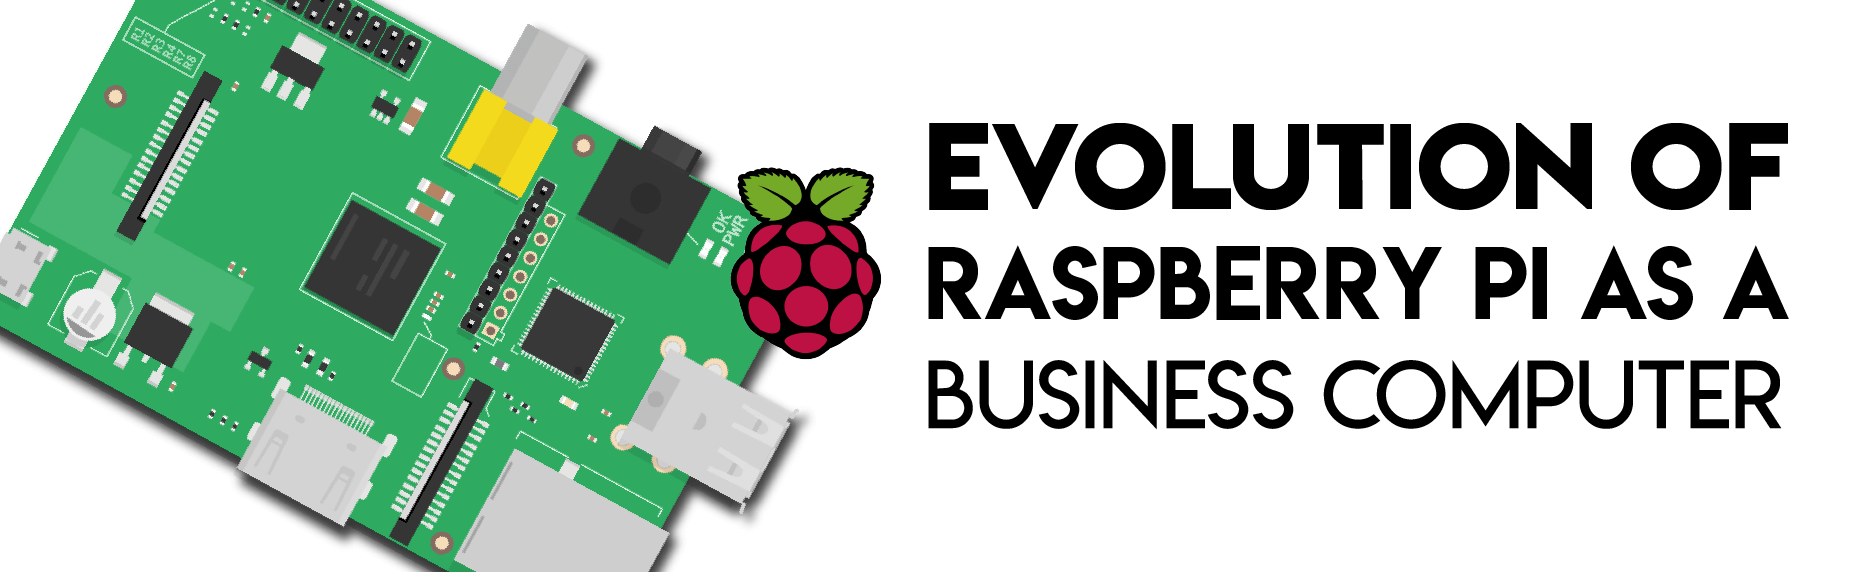 Raspberry Pi as a Business Computer